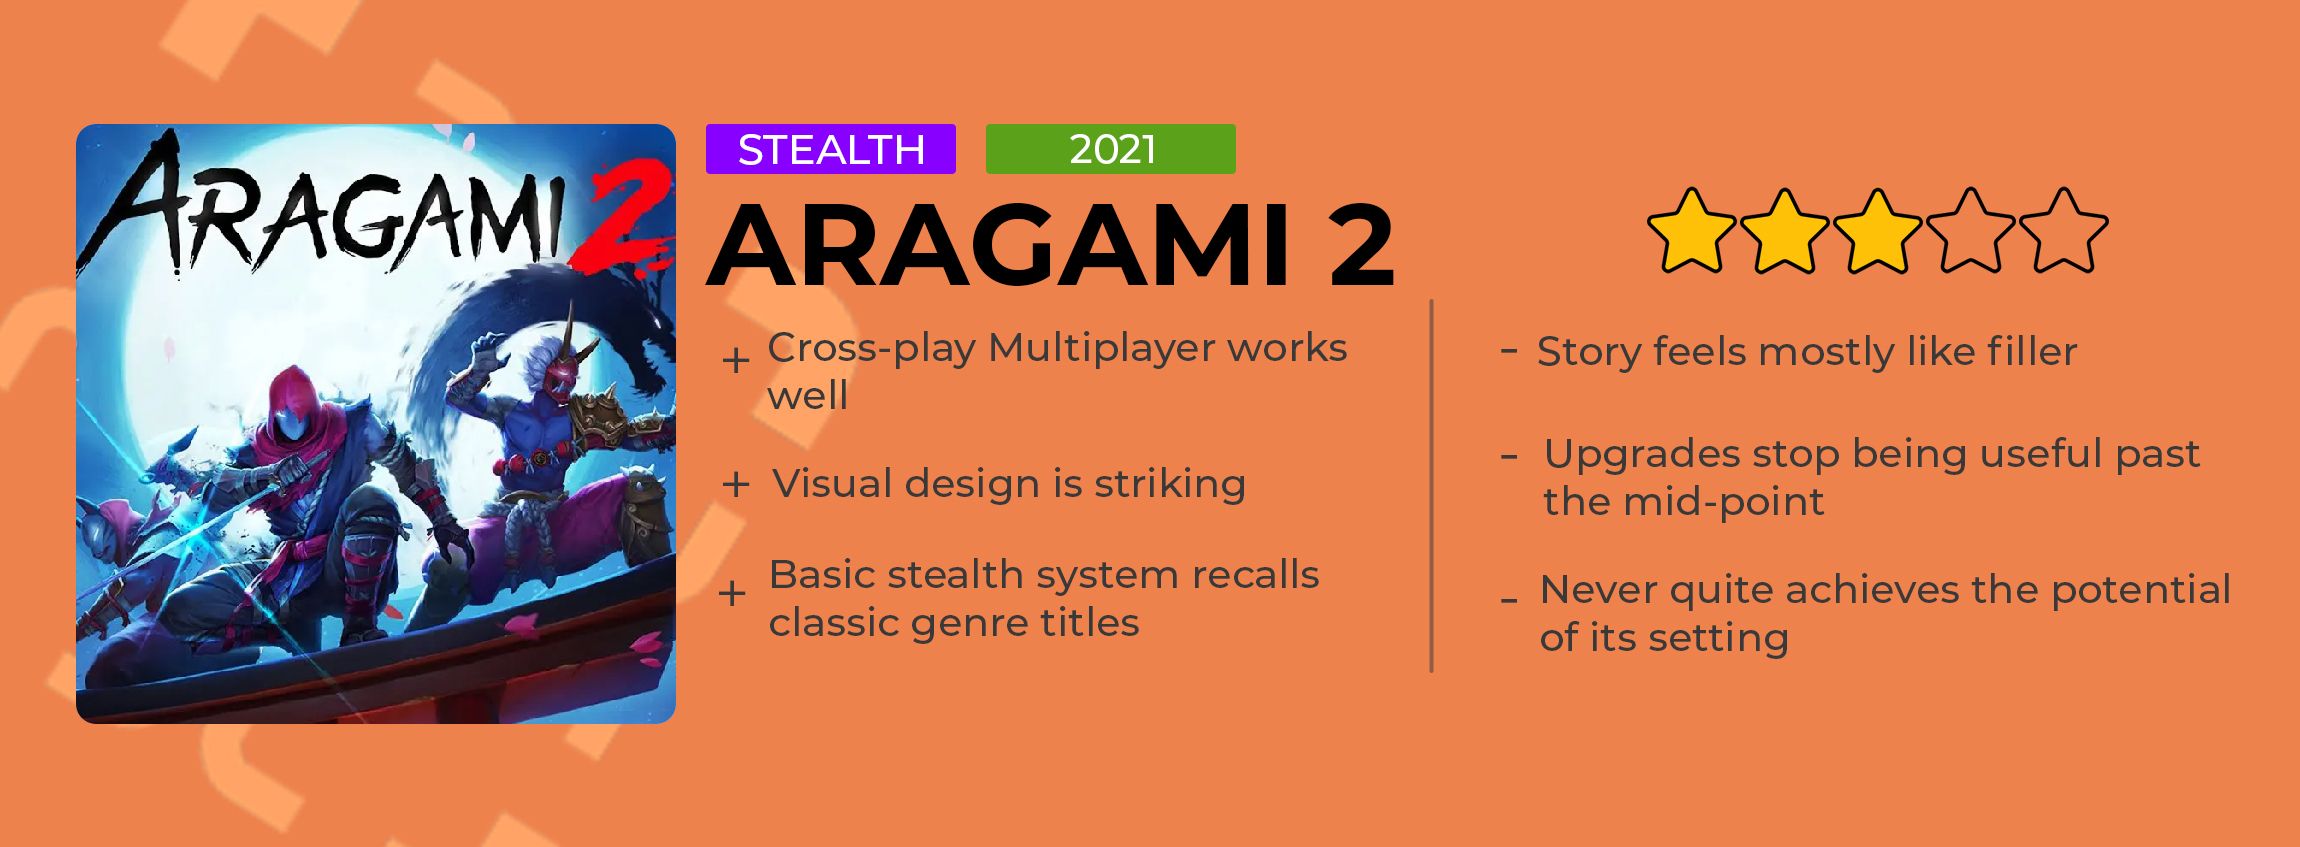 aragami achievement guide